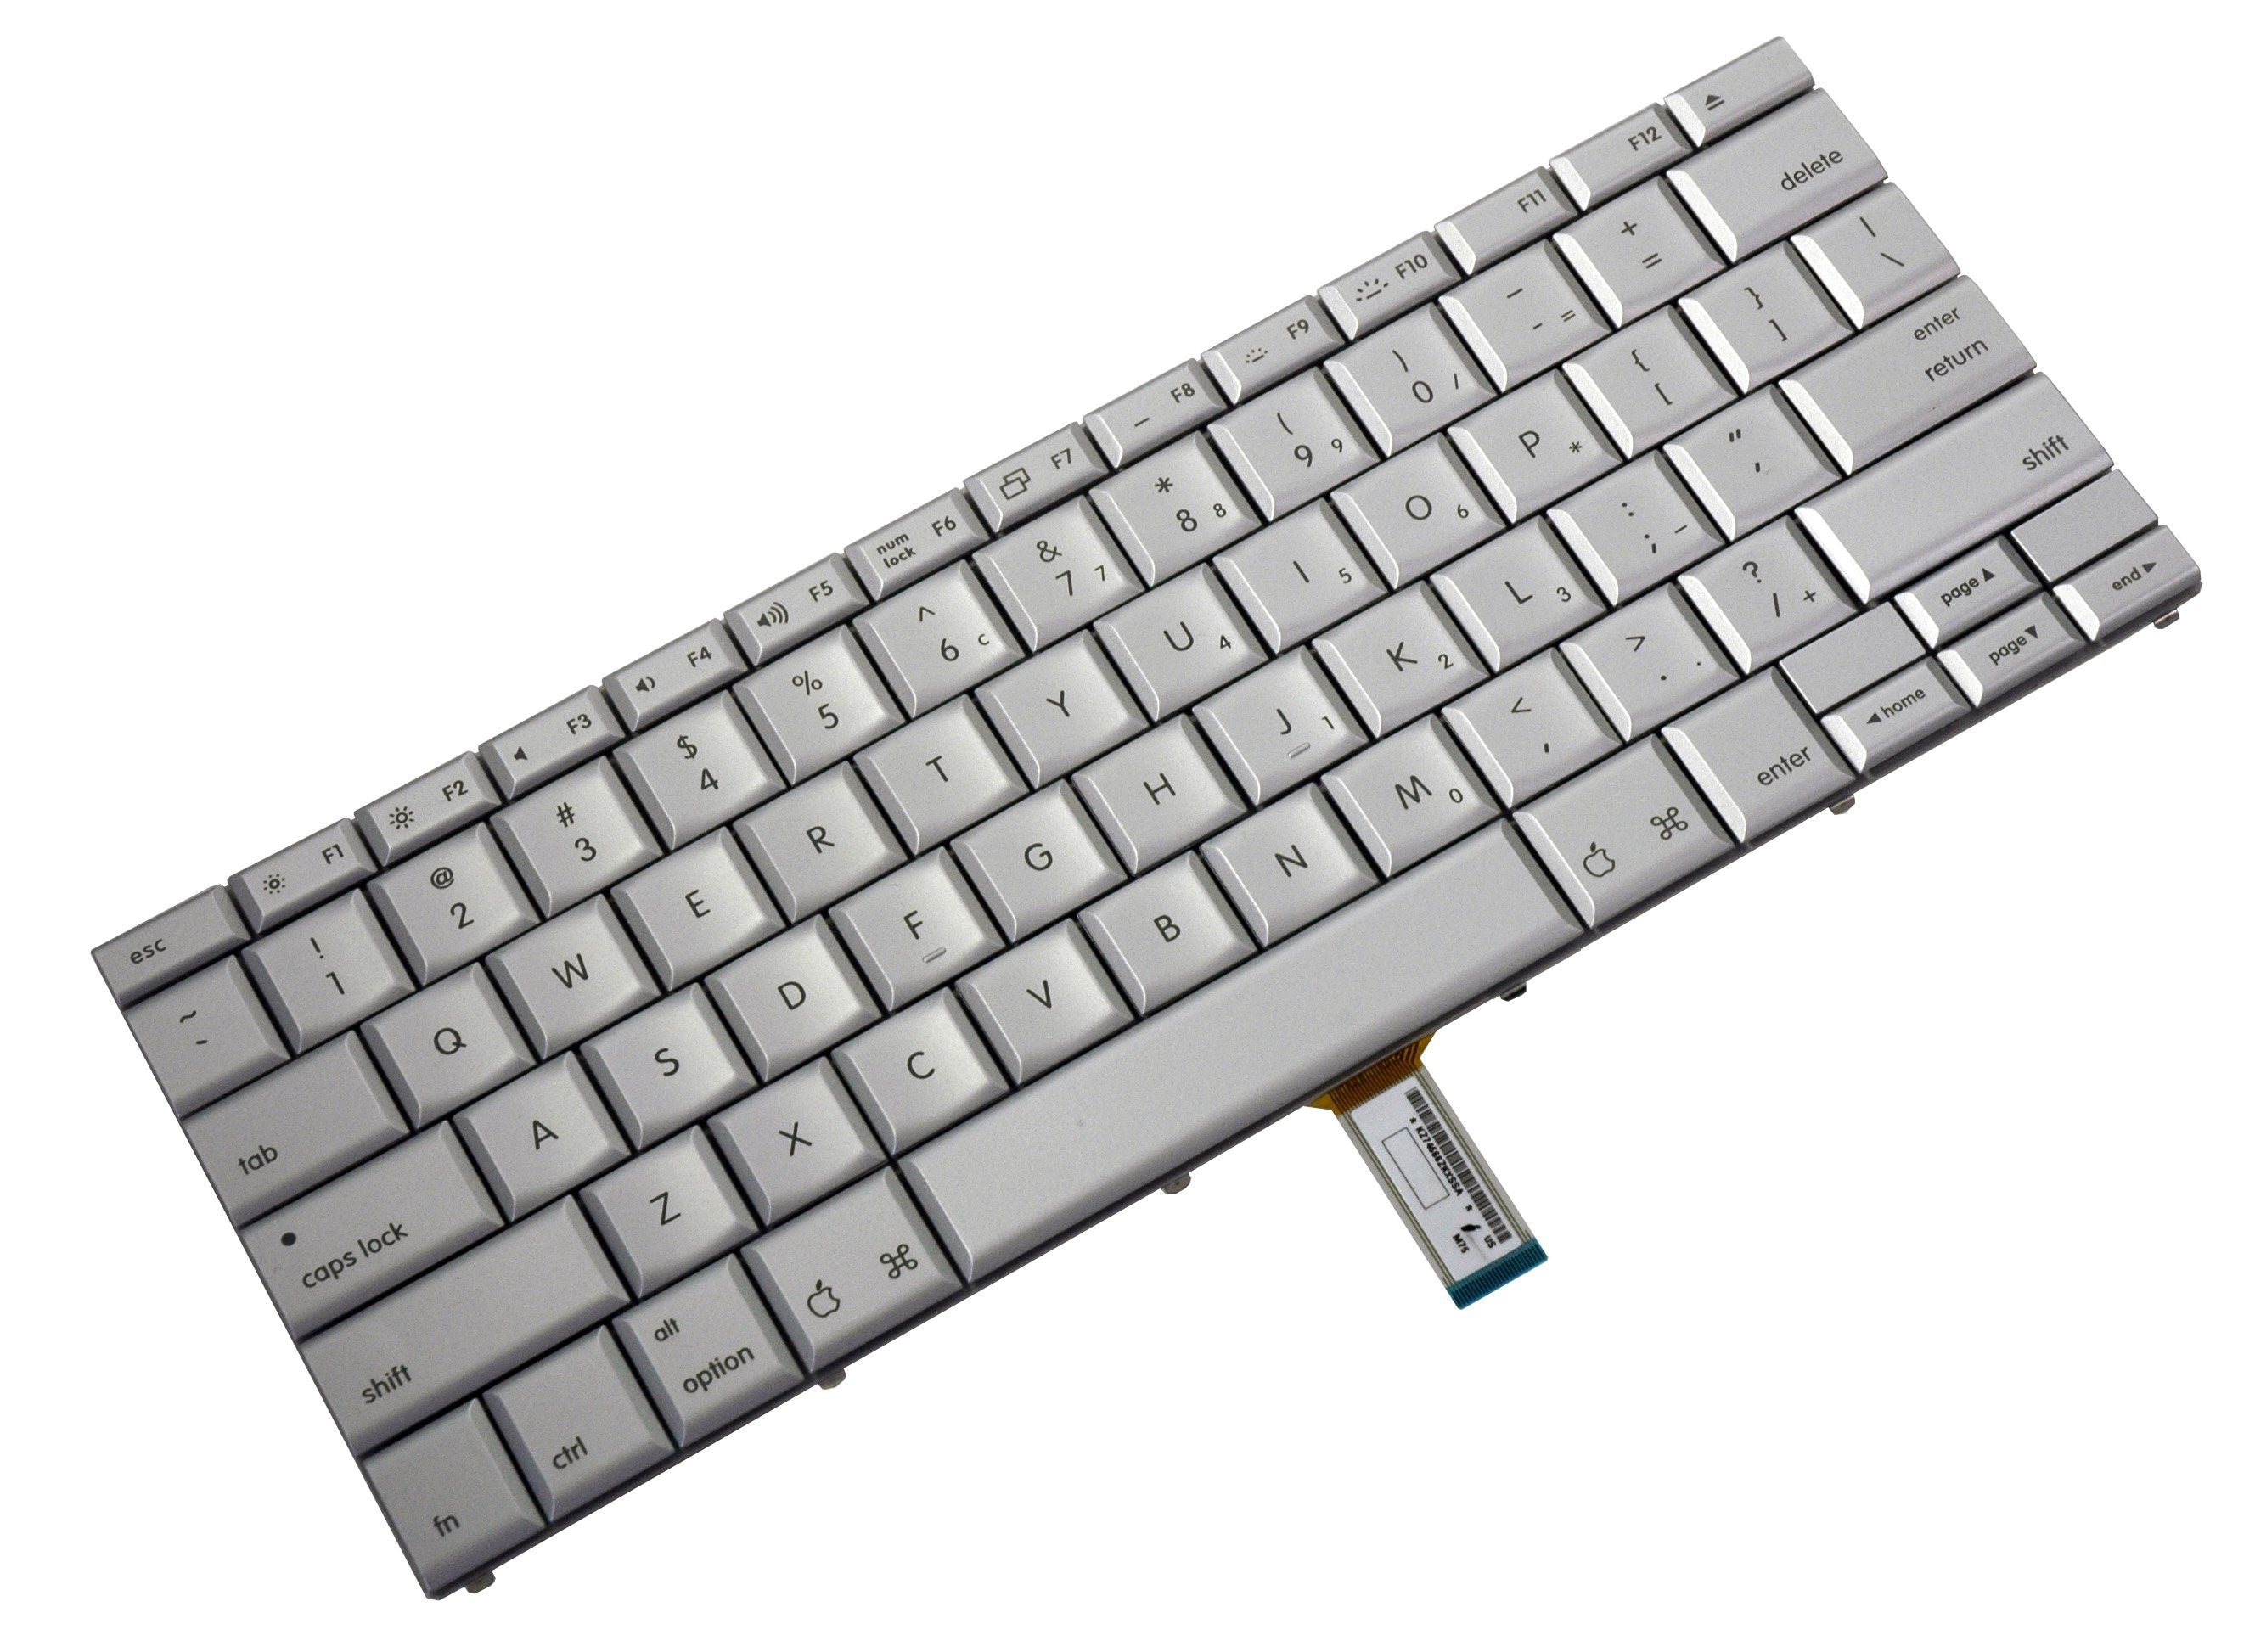 MacBook Pro 15" (Model A1150, A1211, A1226) Keyboard Used English